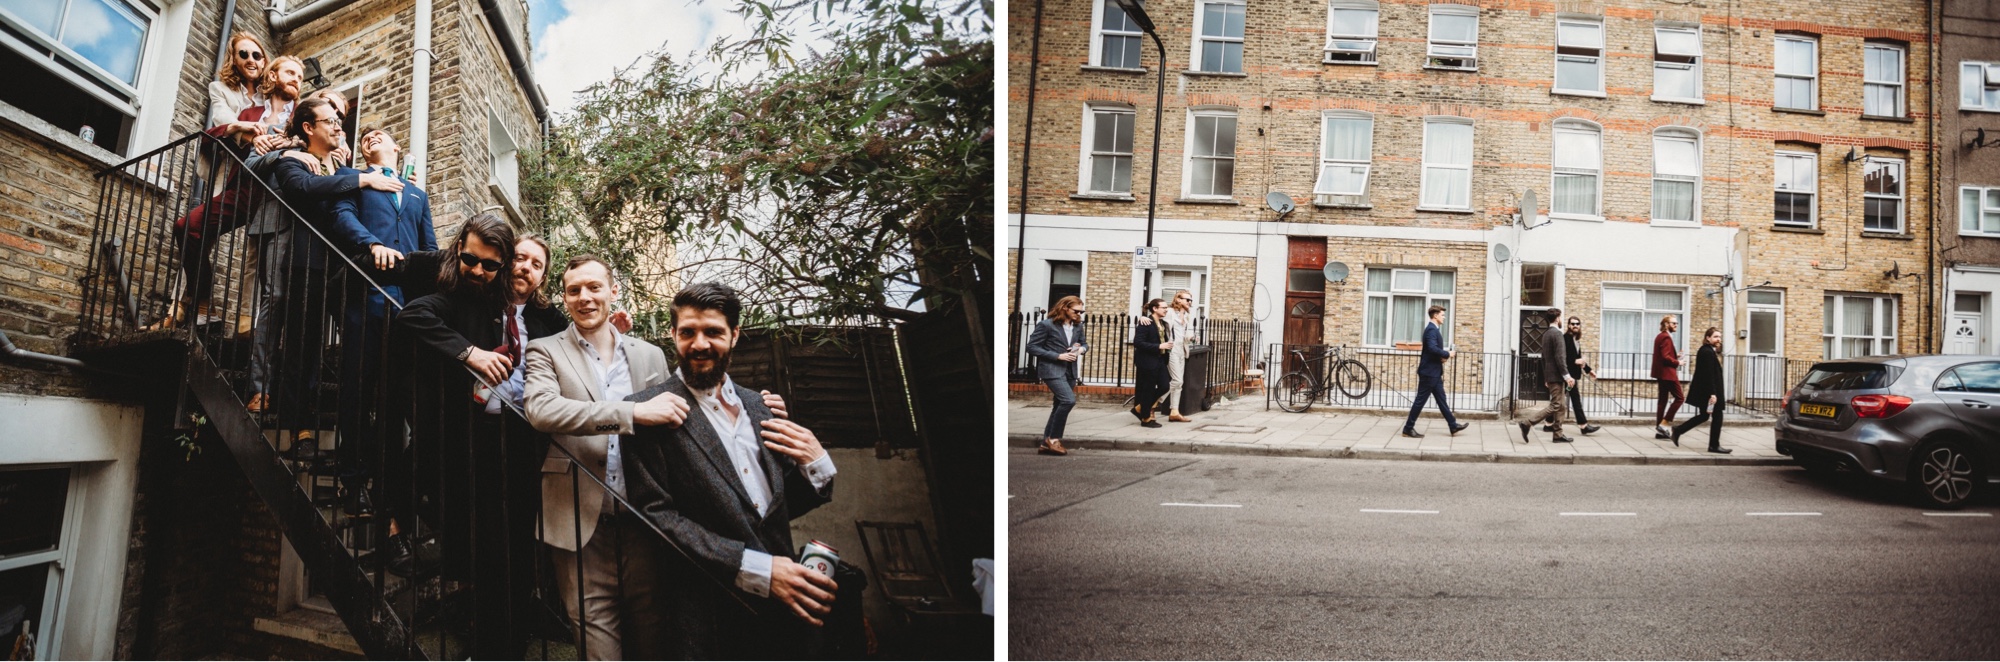 London wedding groomsmen by zakas photography